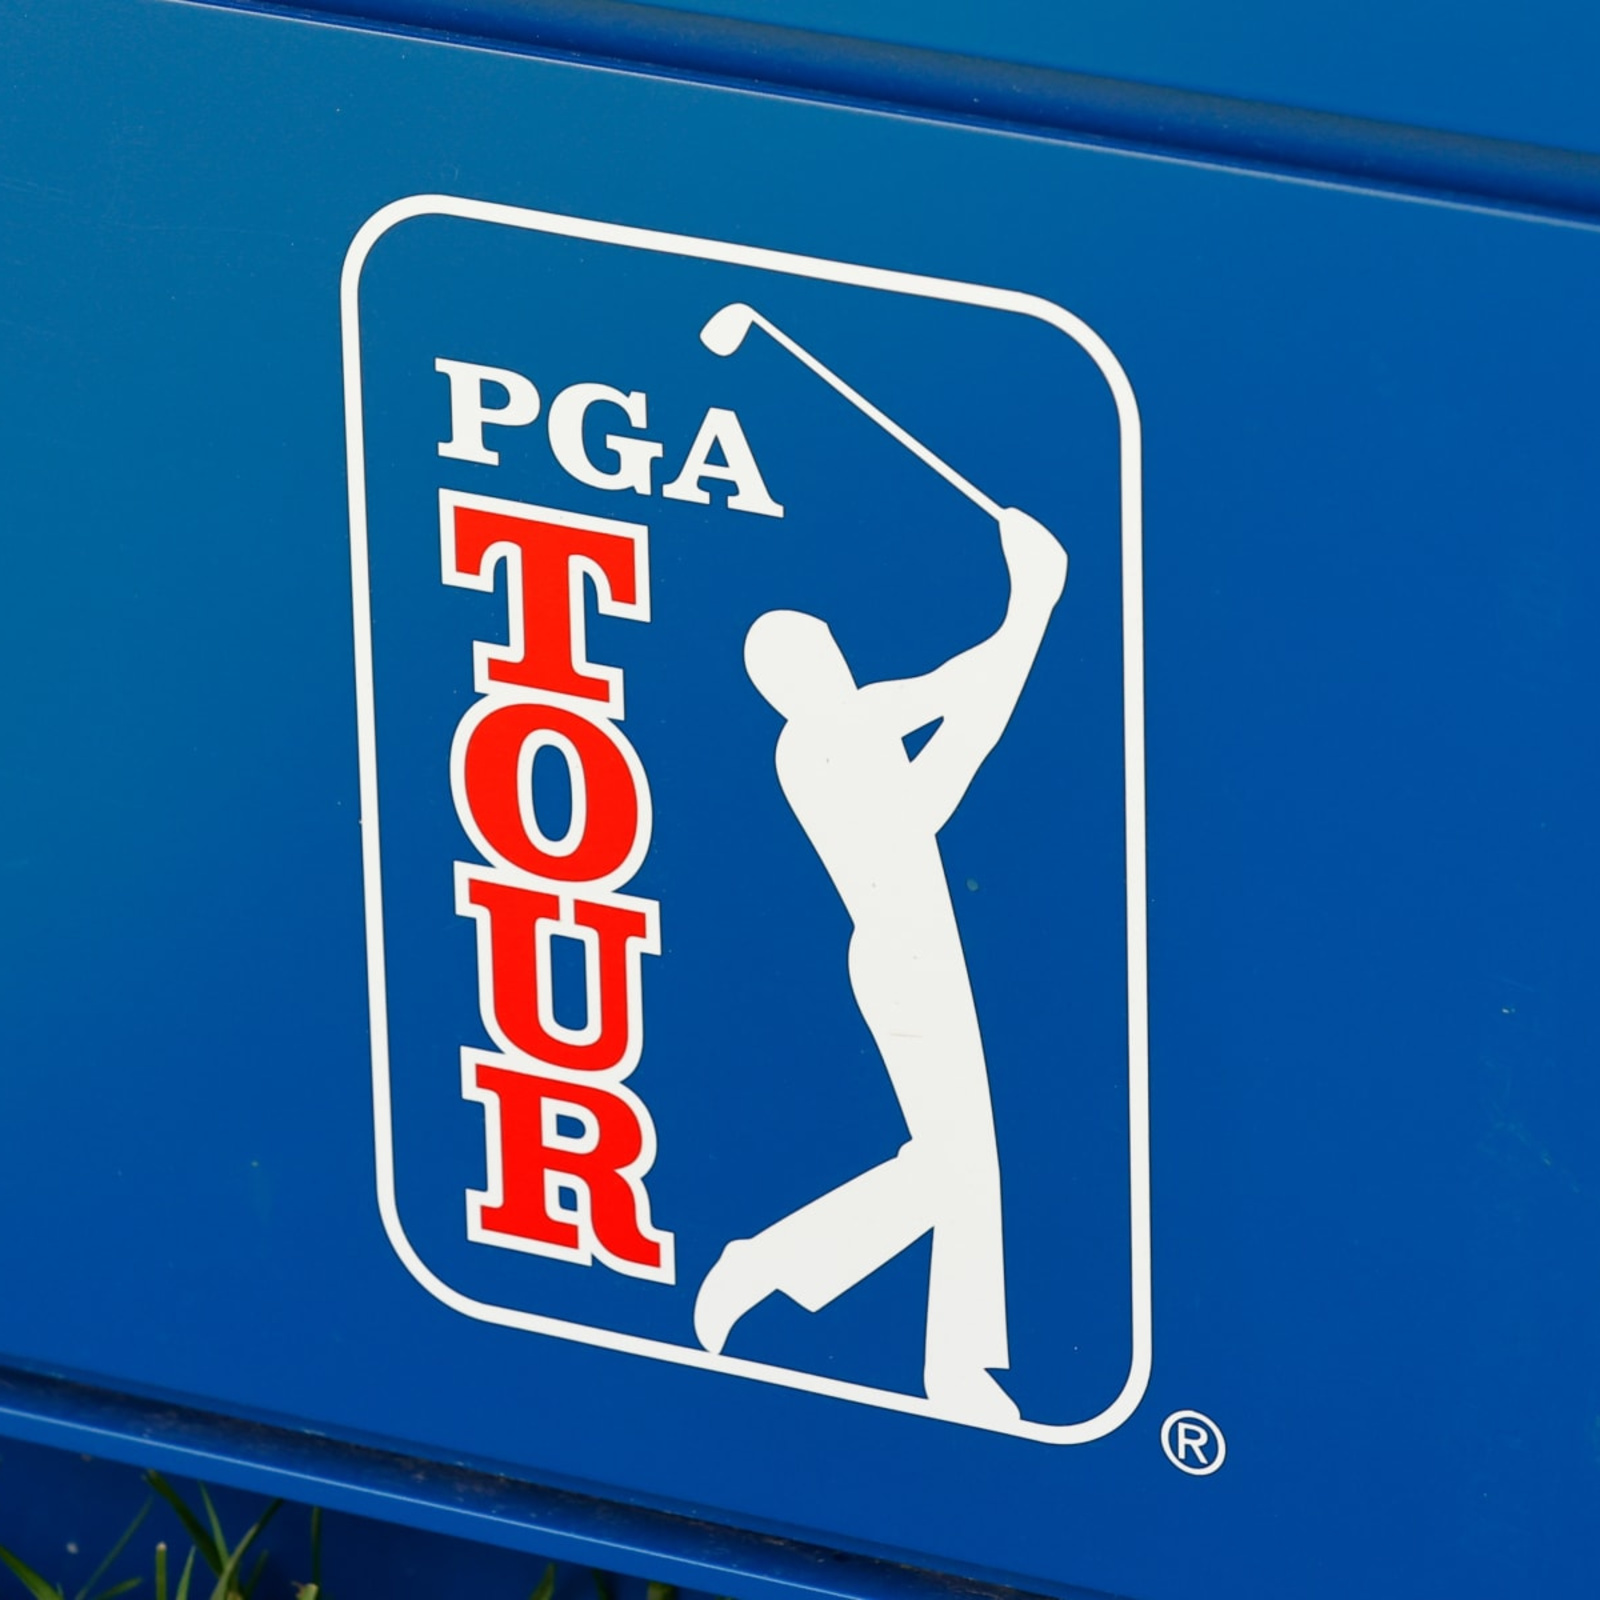 PGA Tour-LIV Golf Negotiations Stagnate as Deadline Approaches